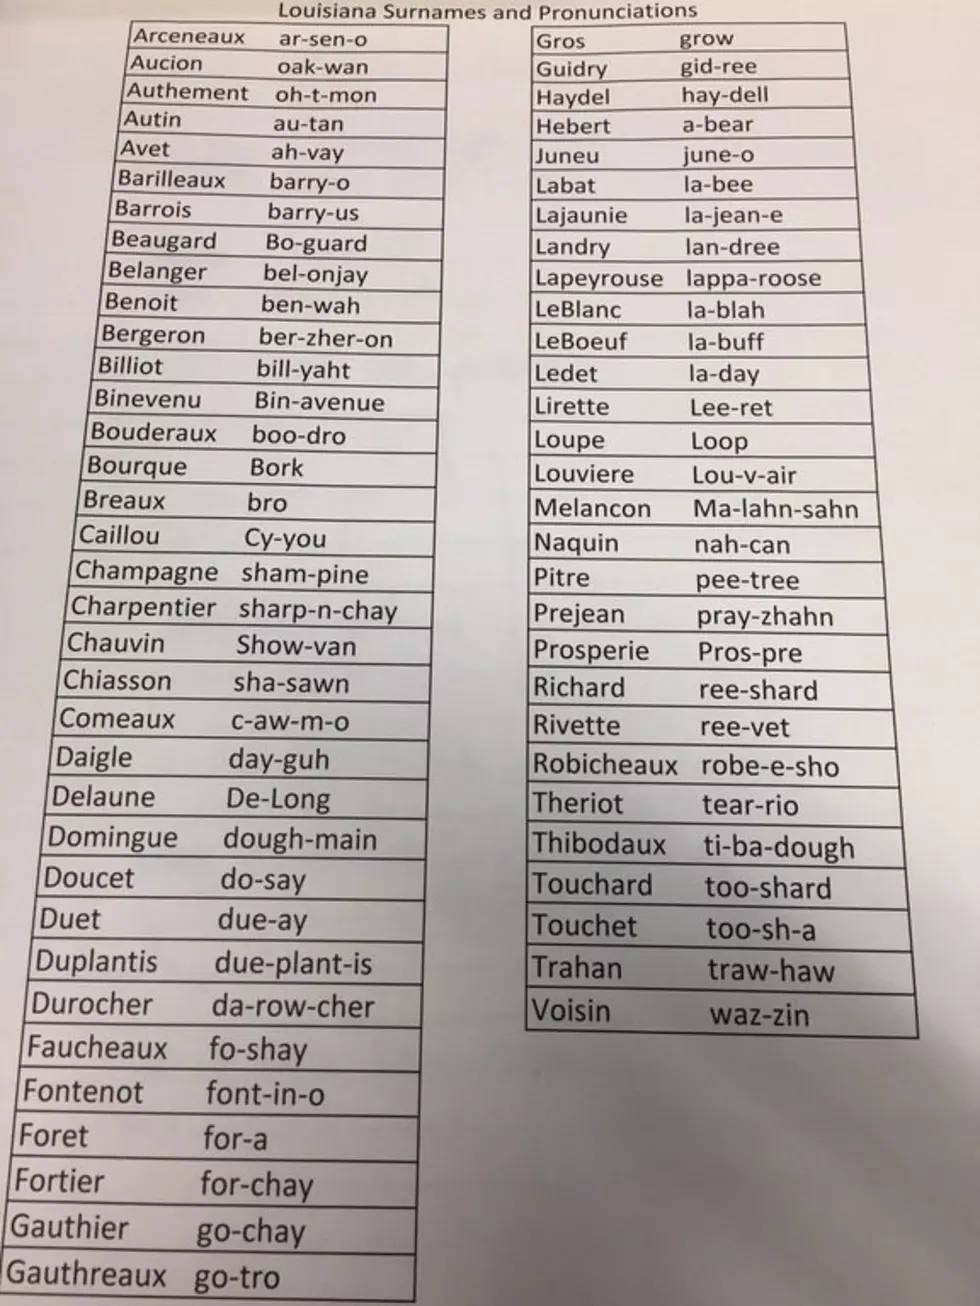 Cajun Pronunciation Guide